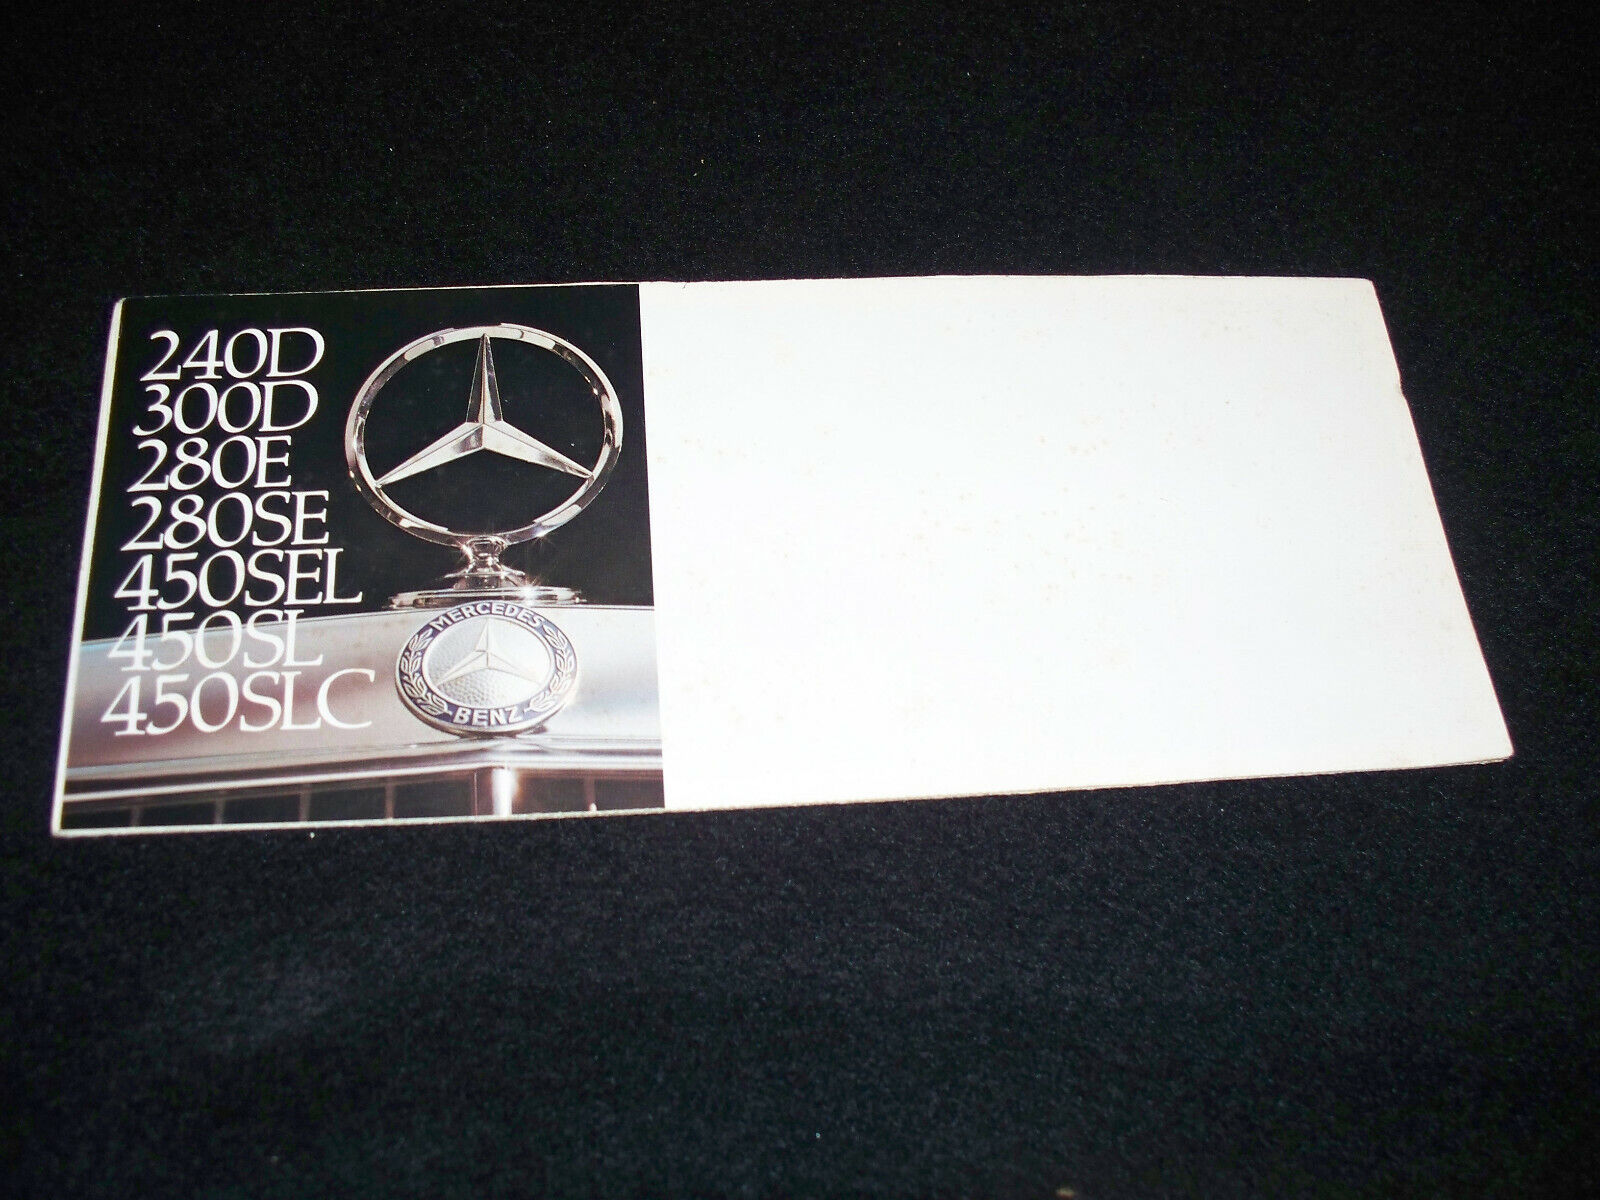 1970's Mercedes-Benz Motor Car Advertising Brochure 240D 300D 280E 280SE 450SEL